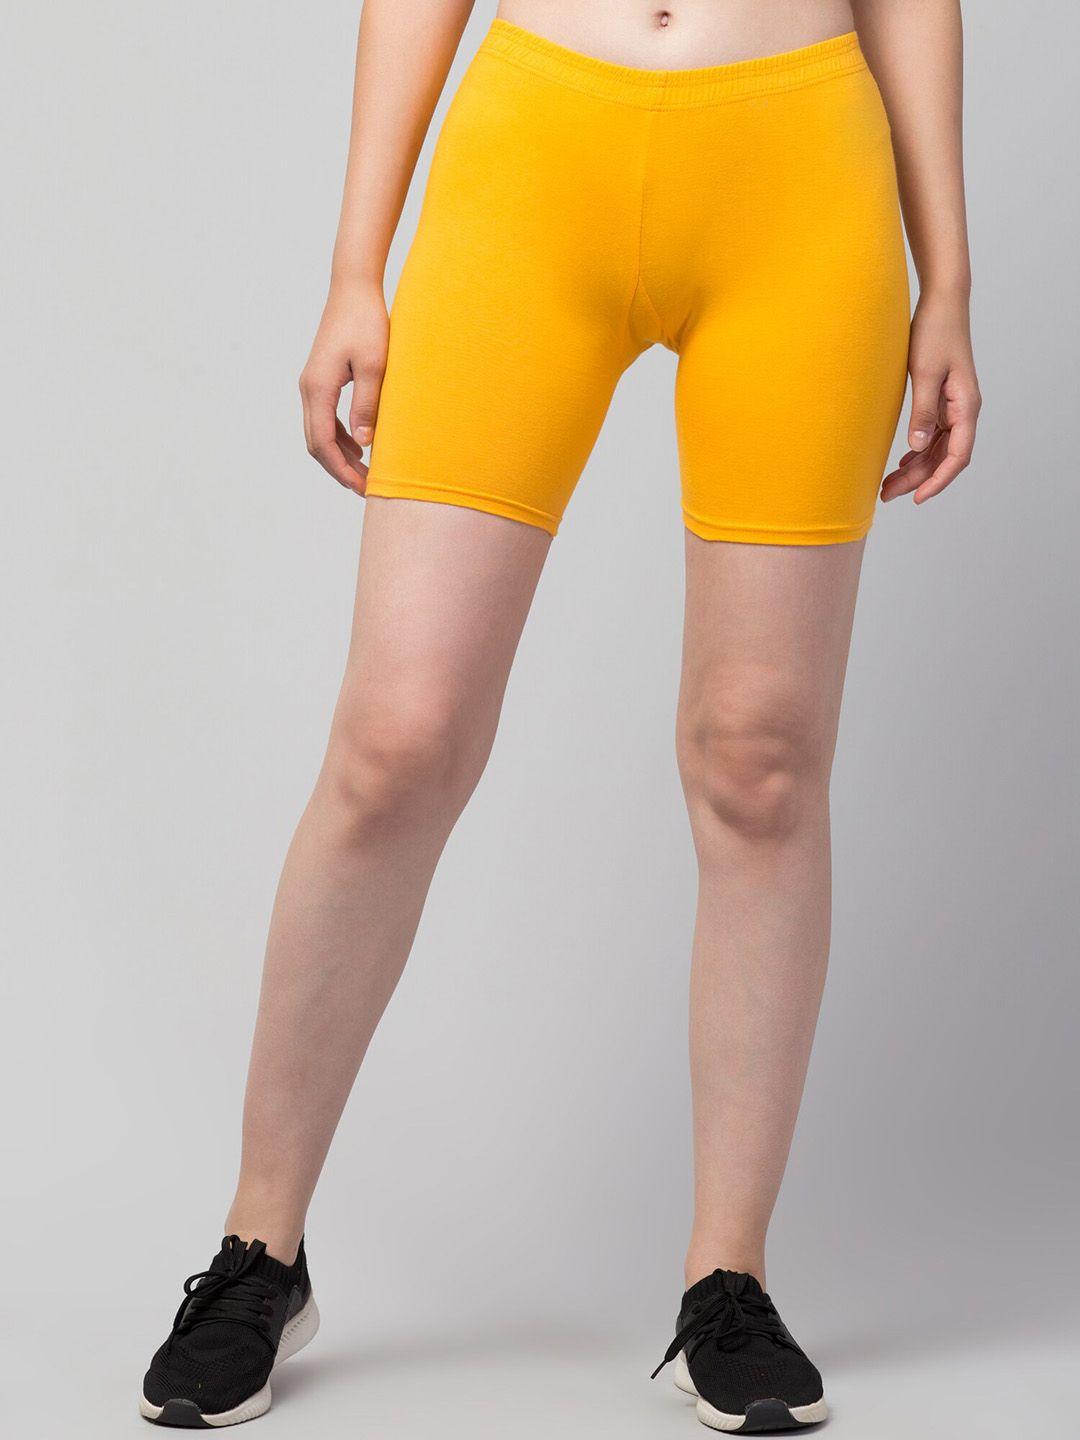 apraa & parma women slim fit pure cotton cycling sports shorts